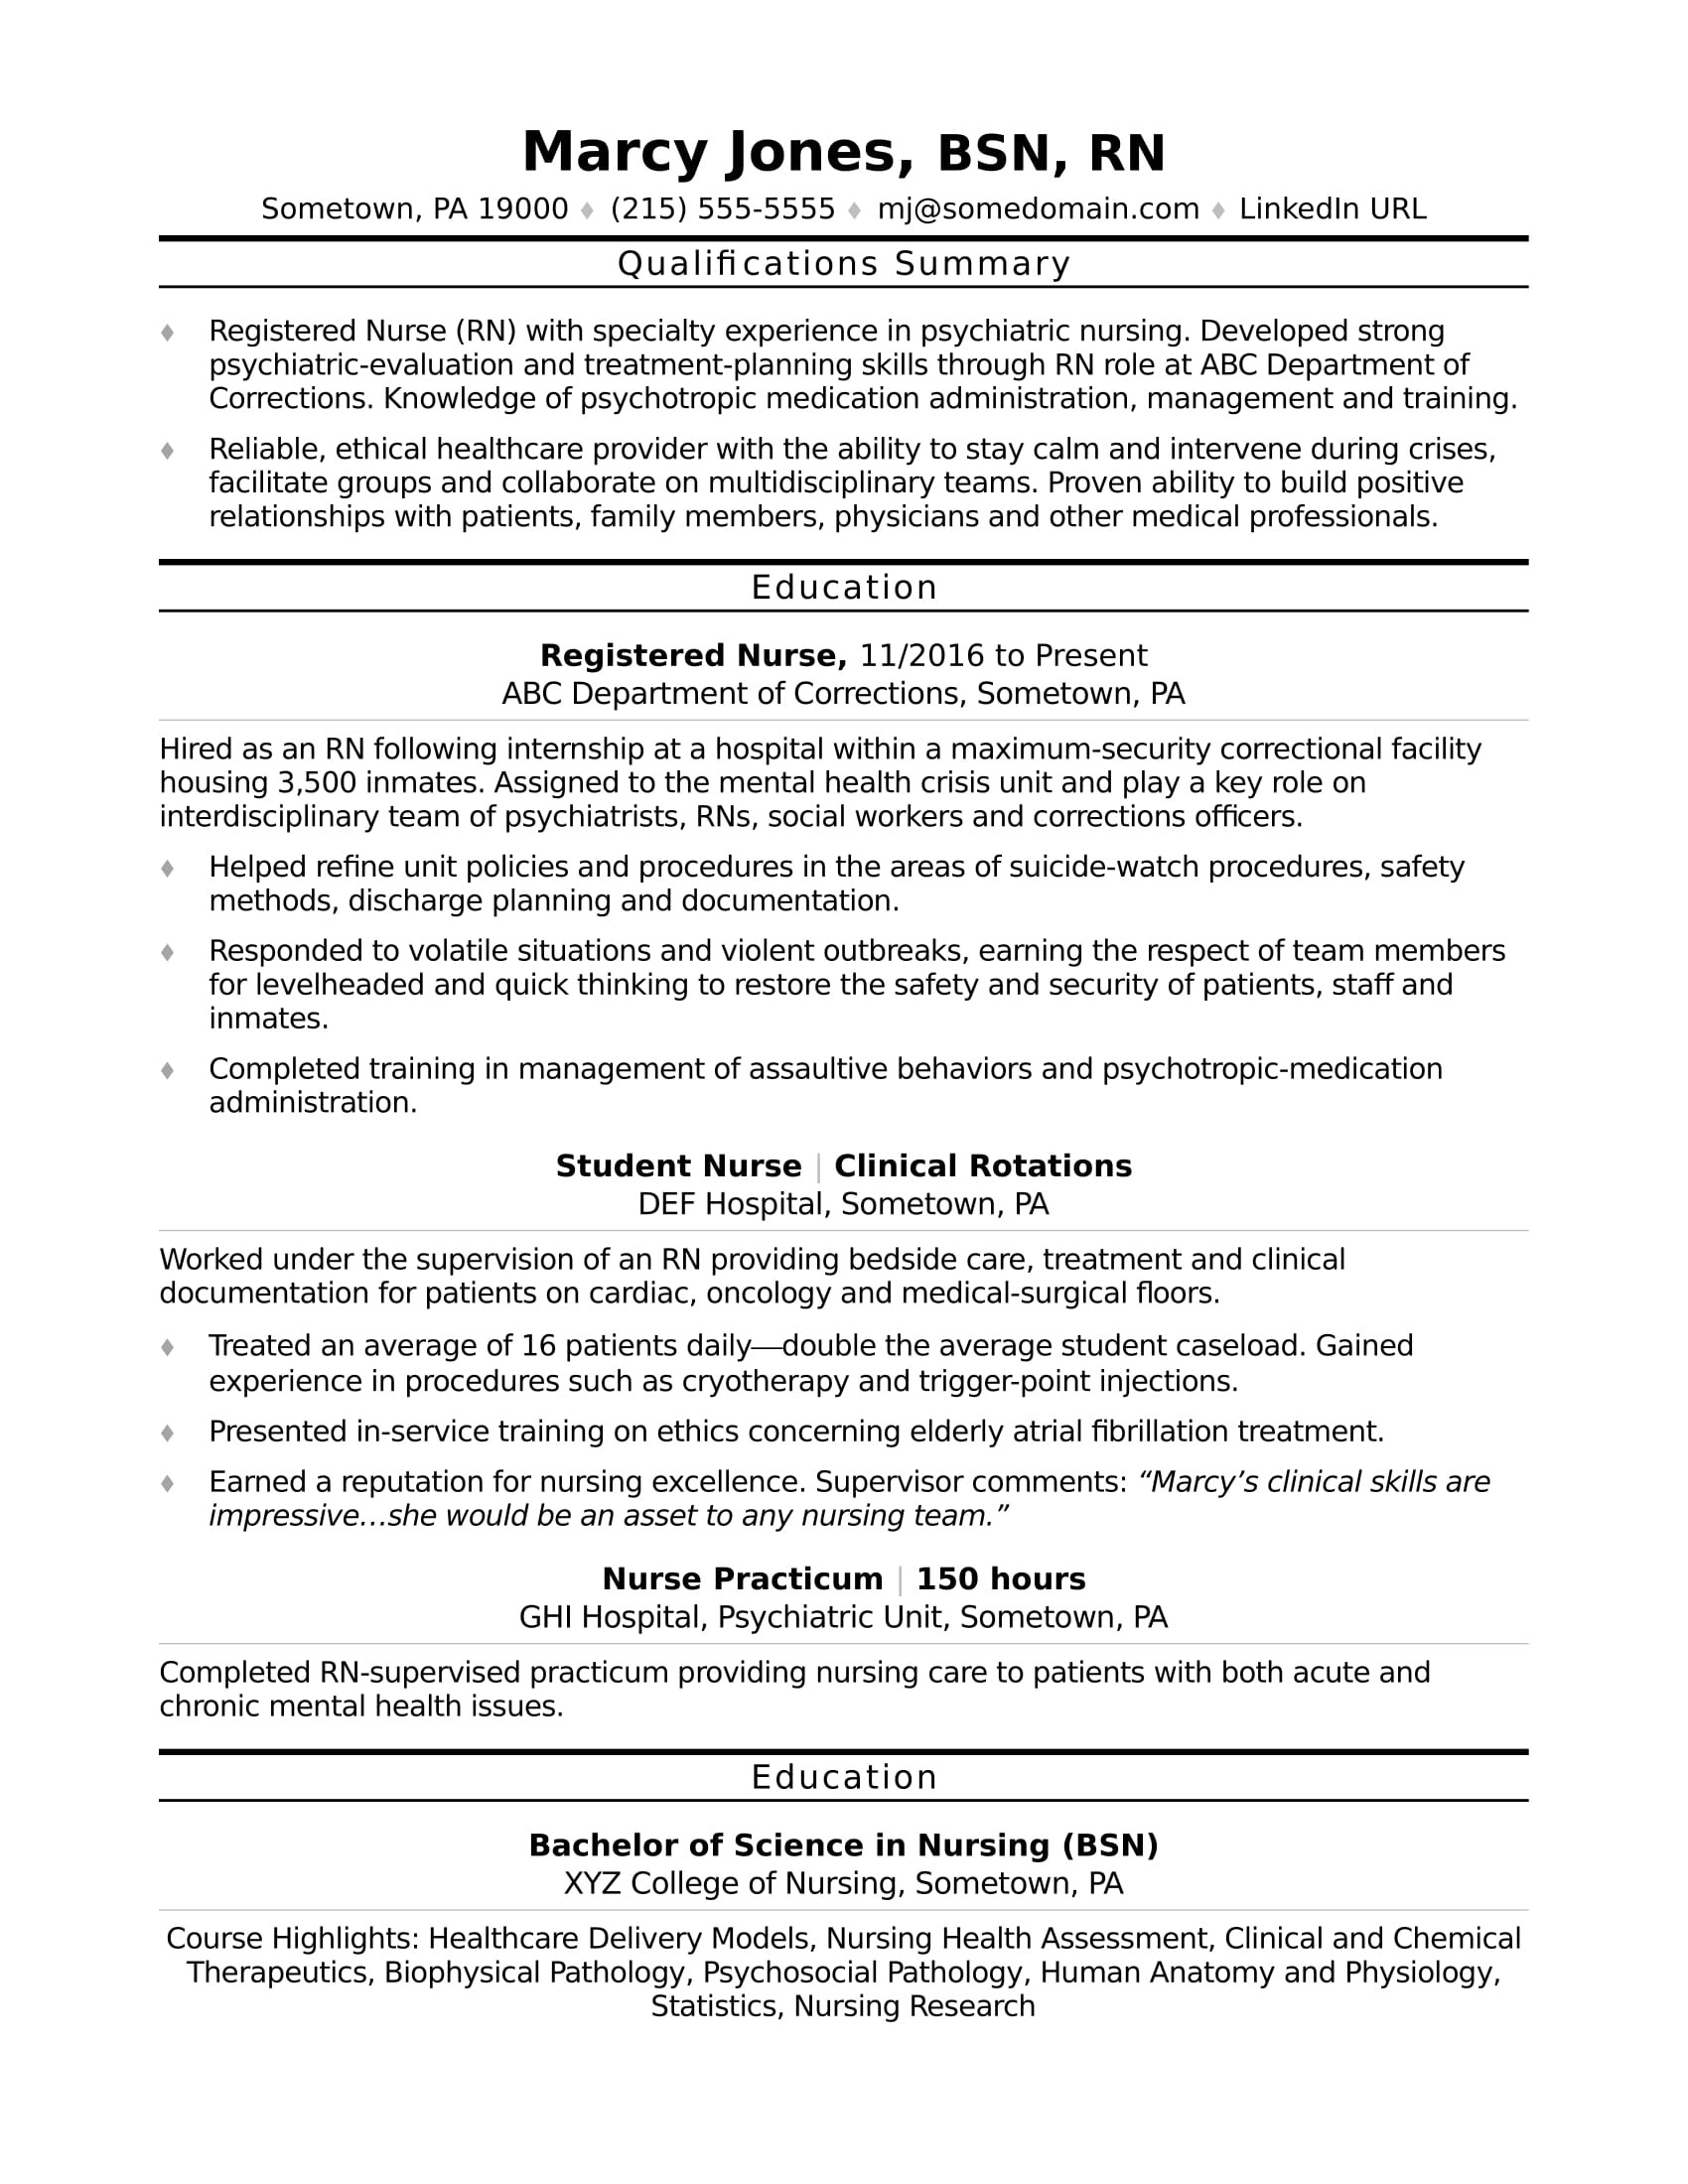 Samples Of Nursing Resumes for New Graduates Entry-level Nurse Resume Monster.com